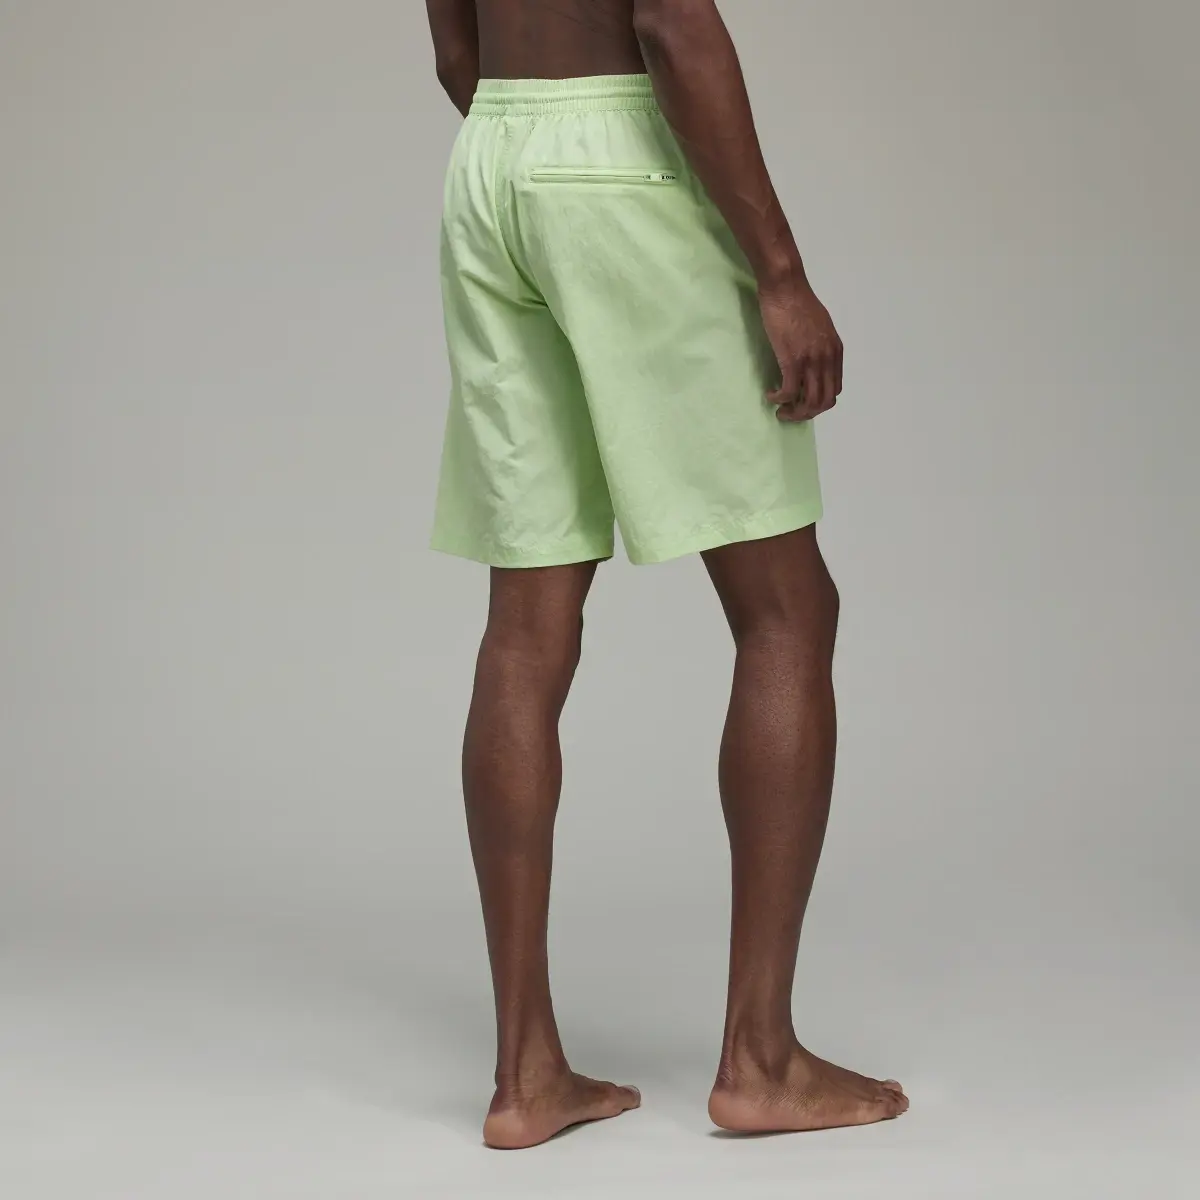 Adidas Classics Swim Shorts - Mid Length. 3